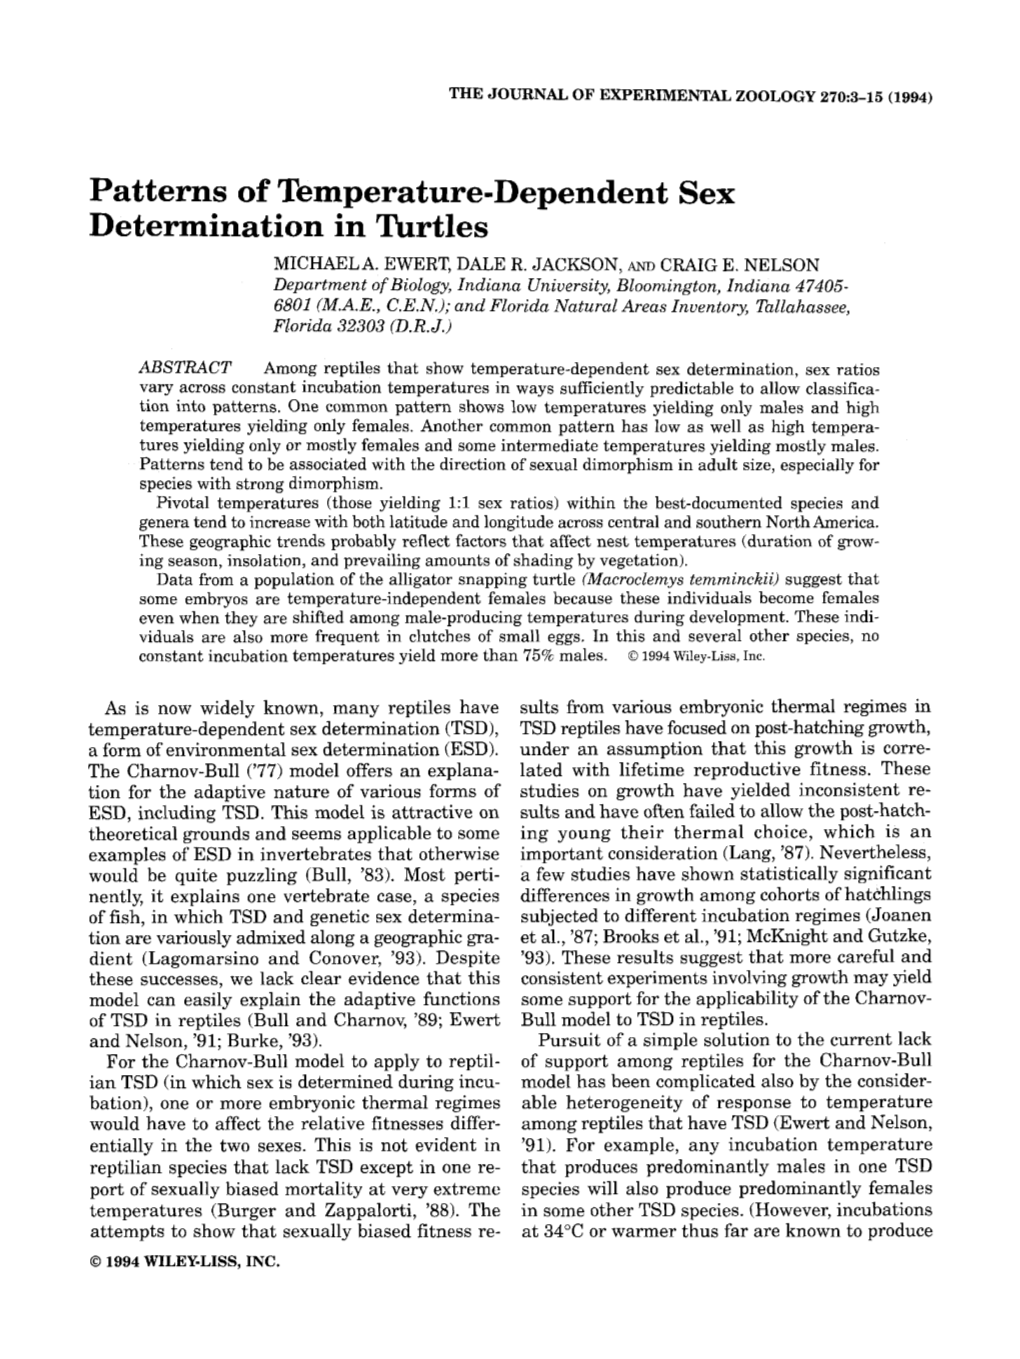 Patterns of Temperature-Dependent Sex Determination in Turtles